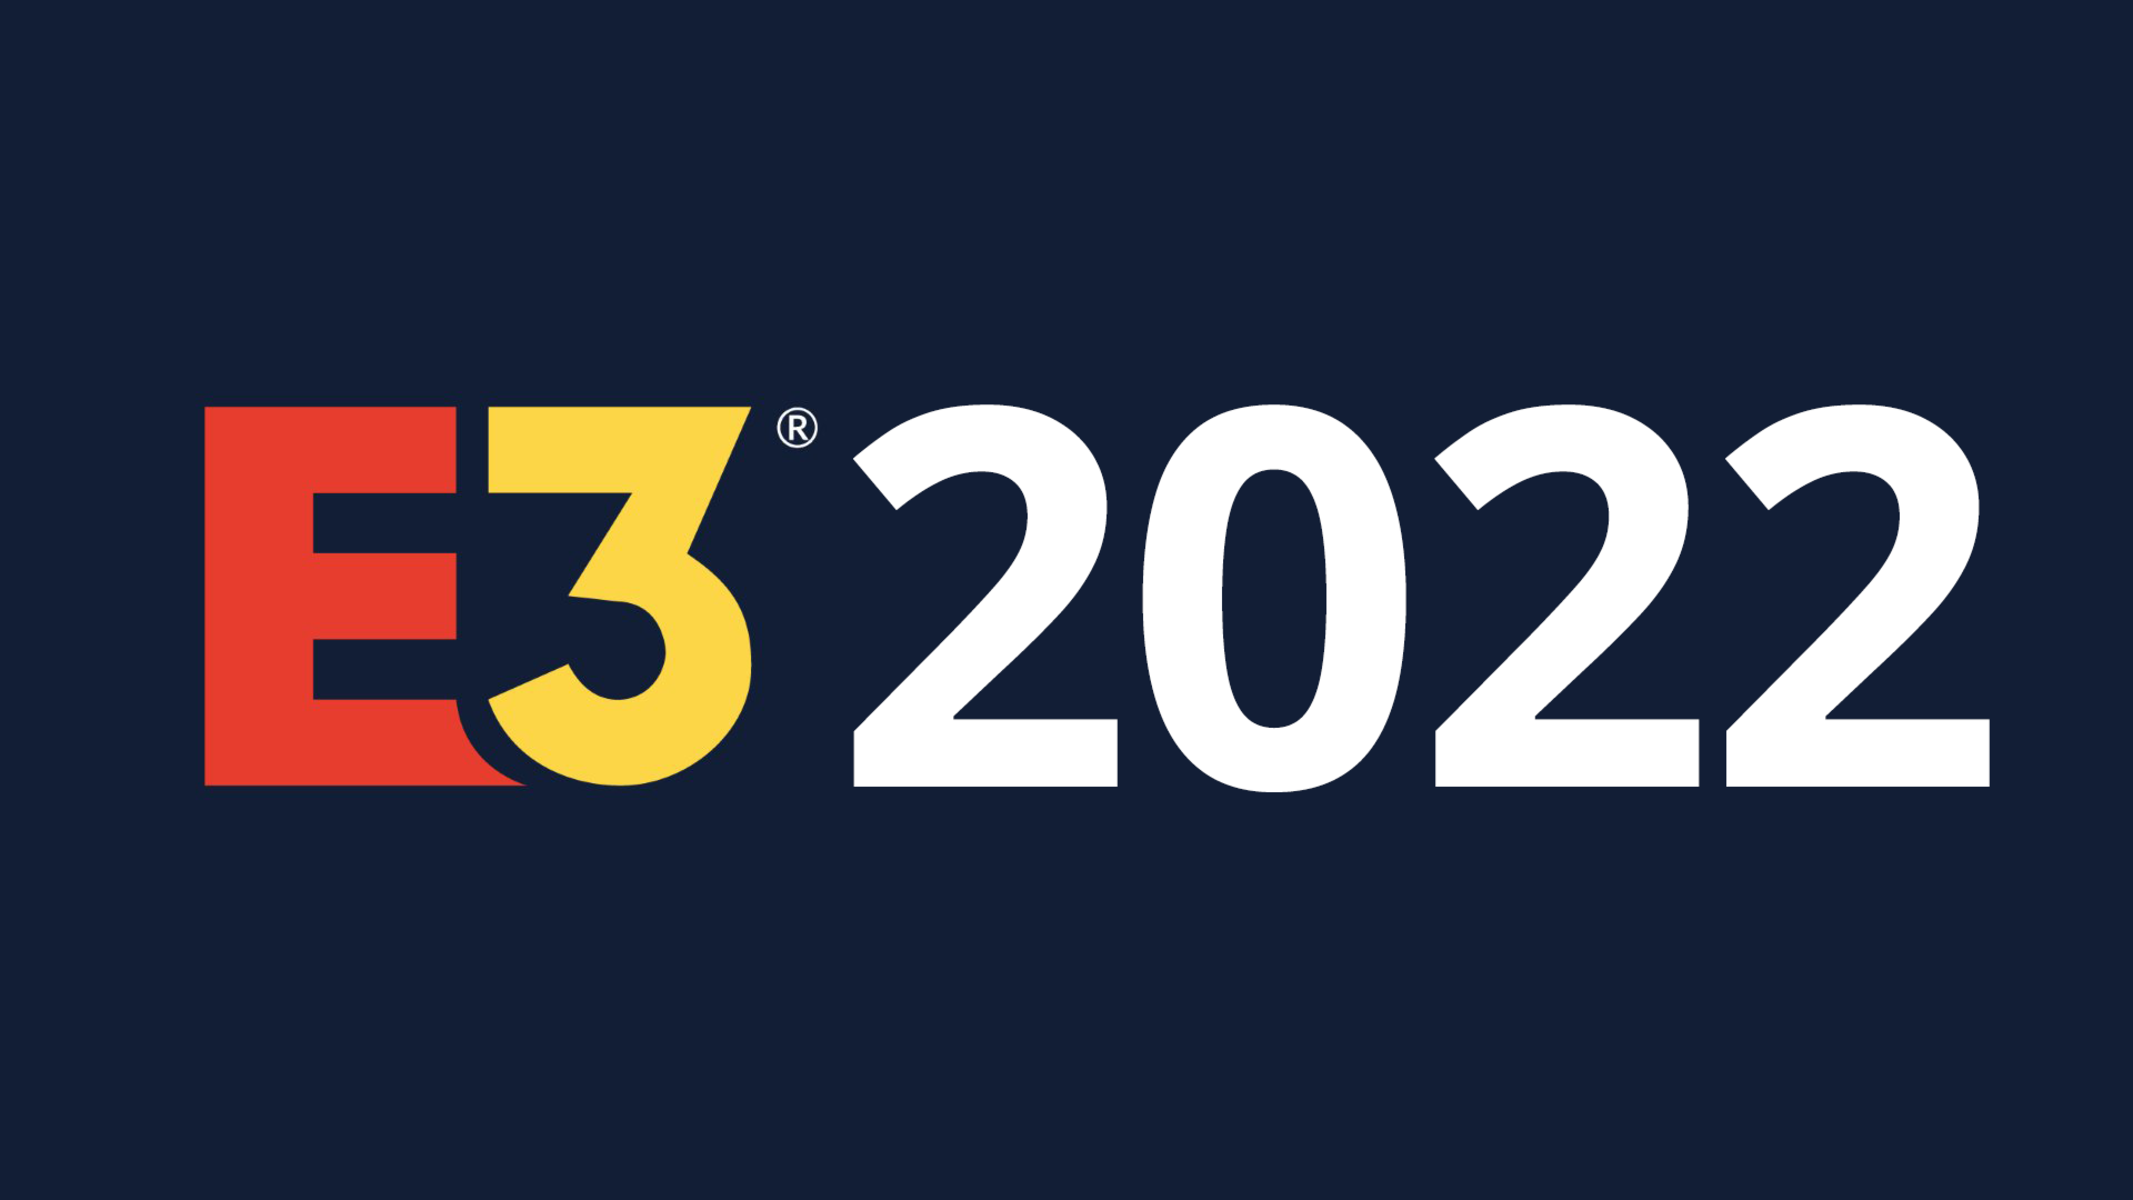 e3 2022